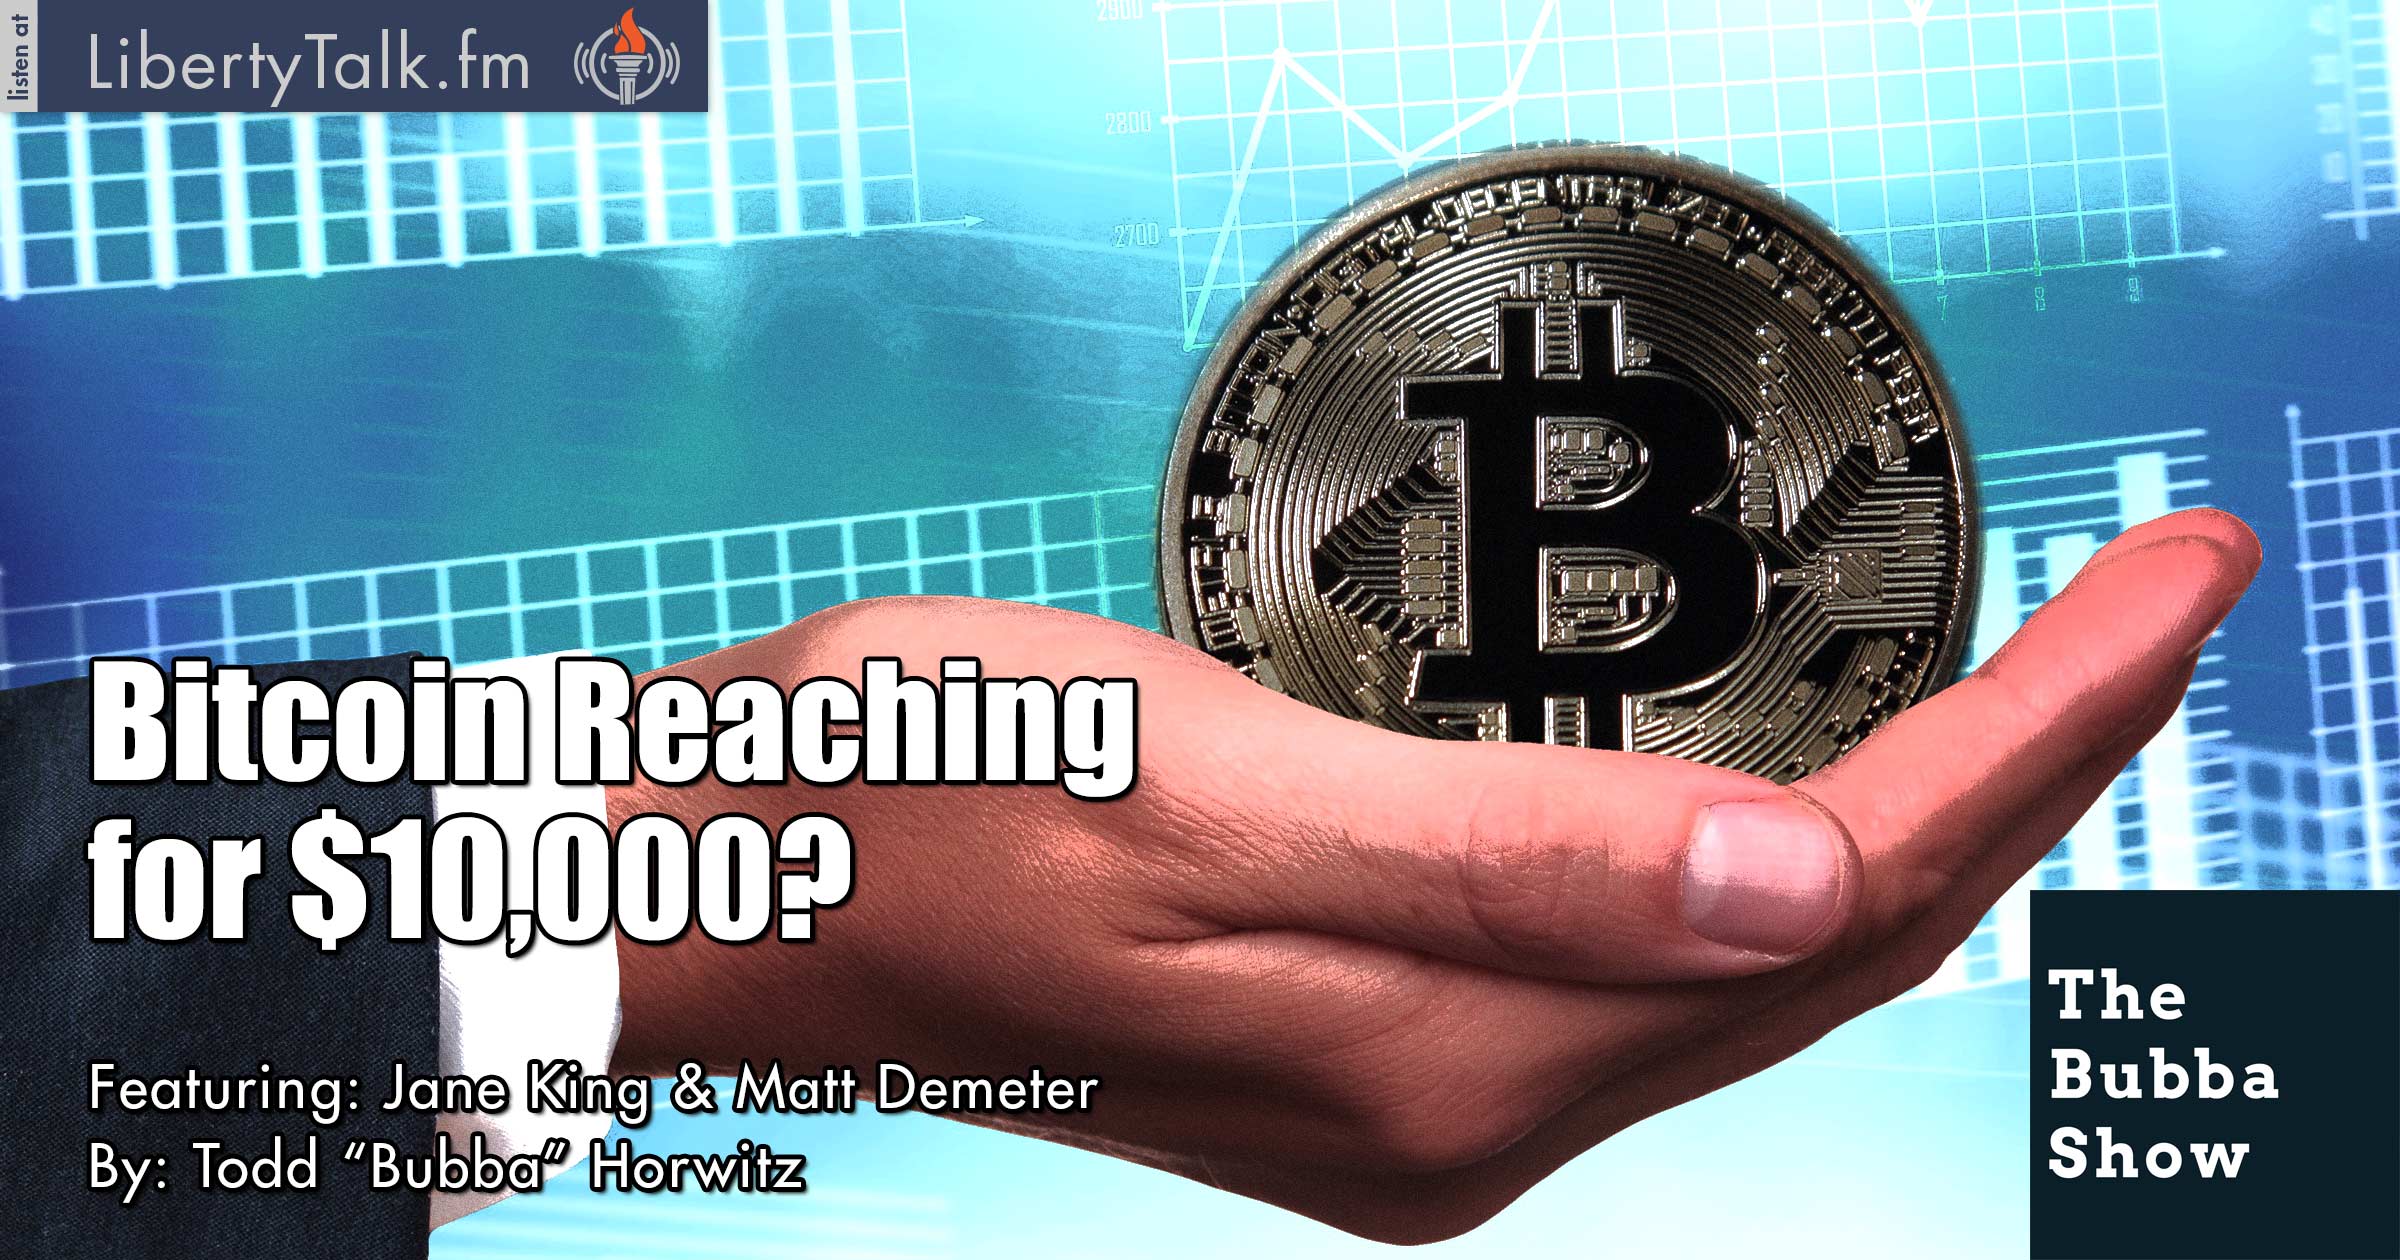 Bitcoin Reaching for $10,000? - The Bubba Show